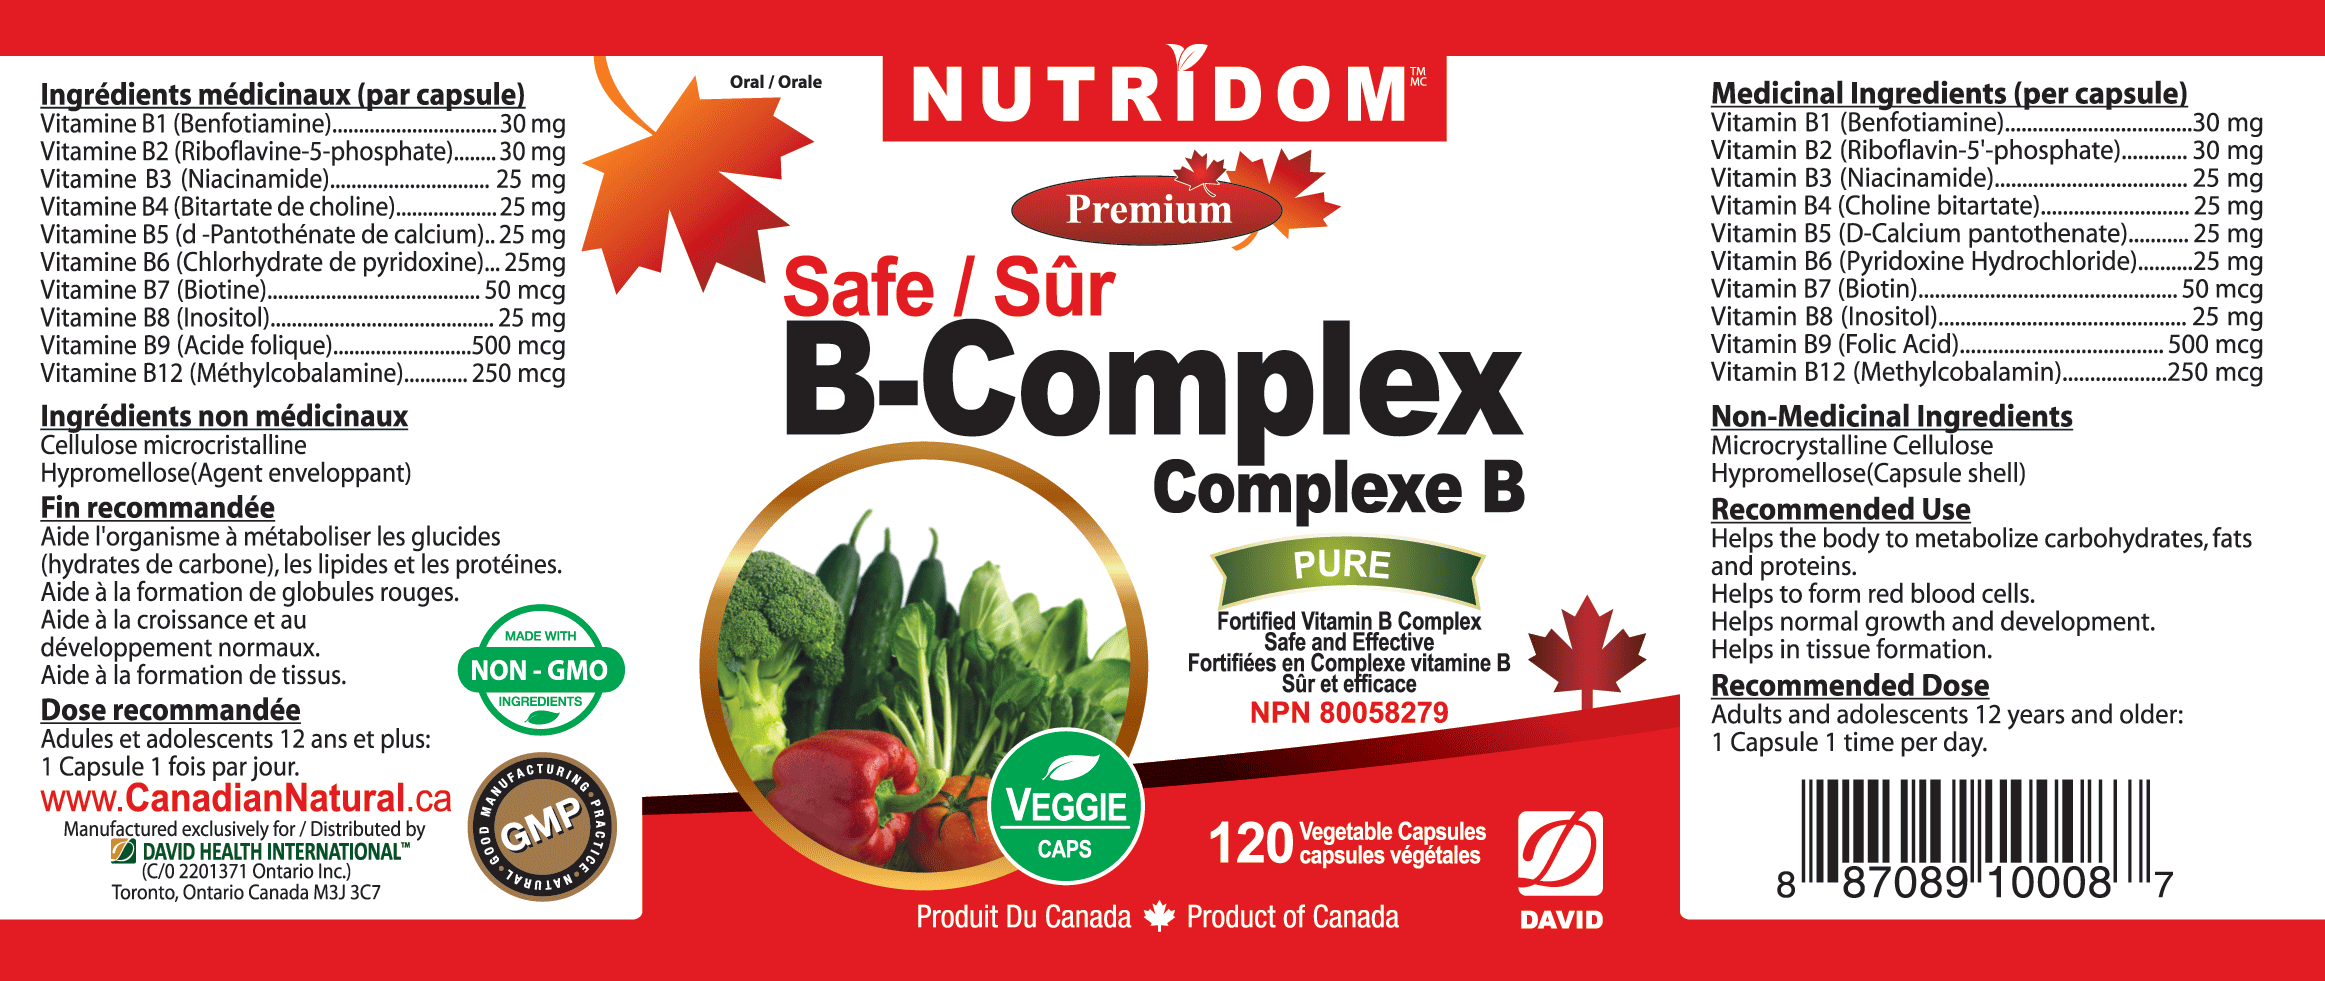 NUTRIDOM SAFE B-COMPLEX